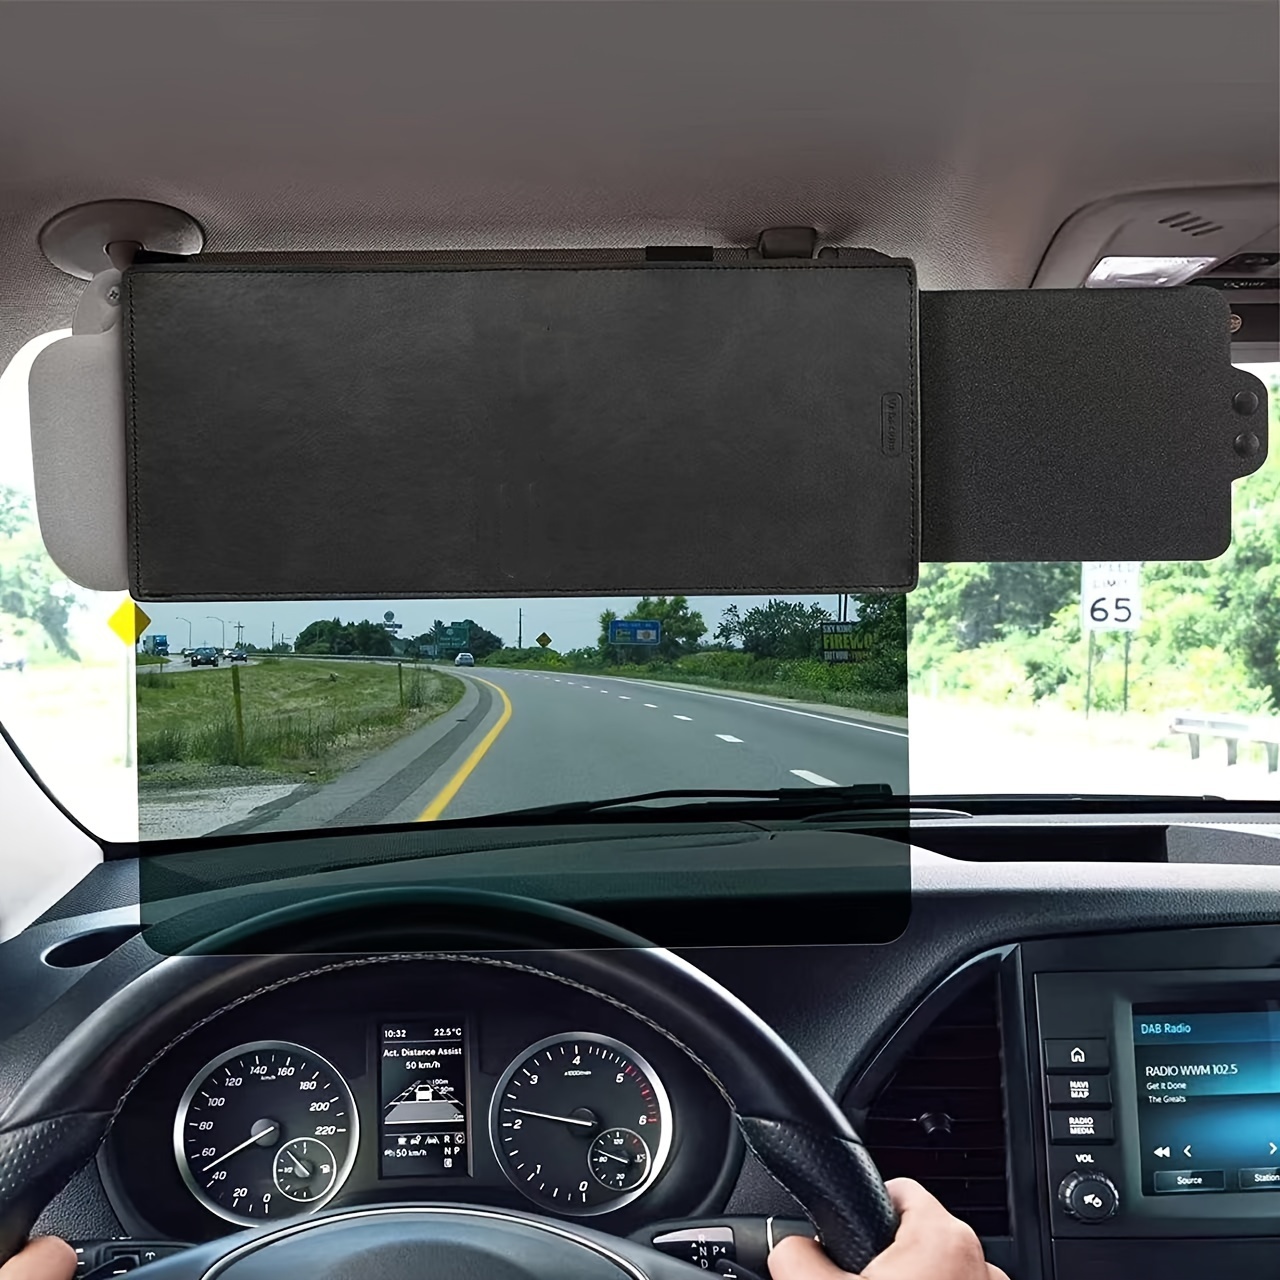 

1pc Car Sun Visor Extender Anti-glare Sun Blocker Car Window Sunshade And Uv Blocker Universal For Cars Interior Accessories